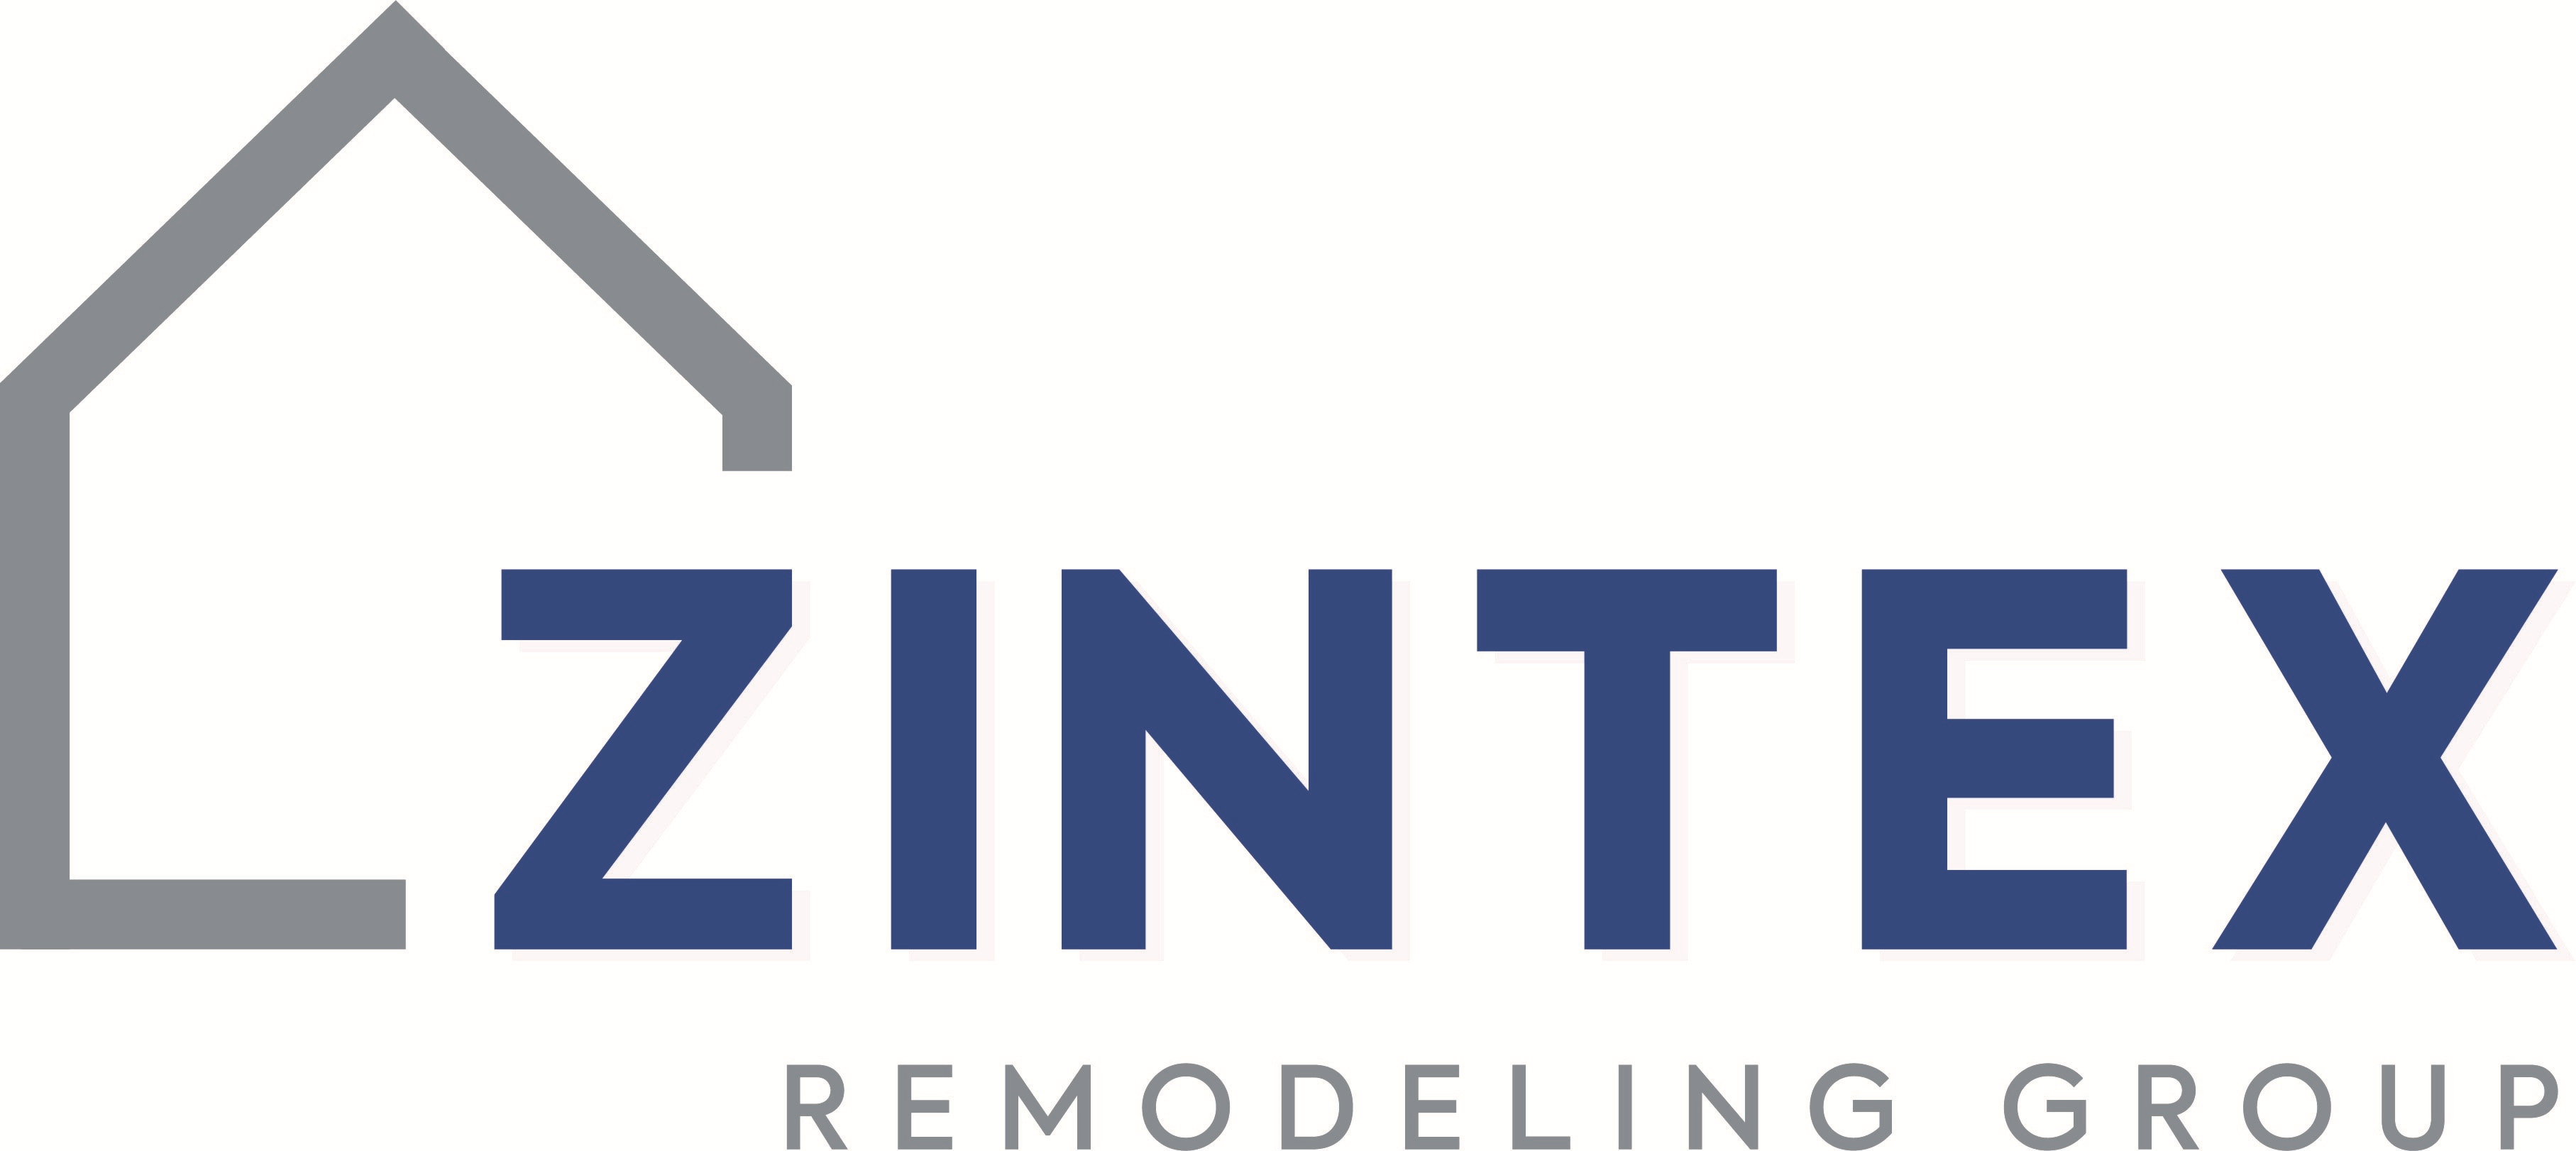 ZINTEX Remodeling Group logo